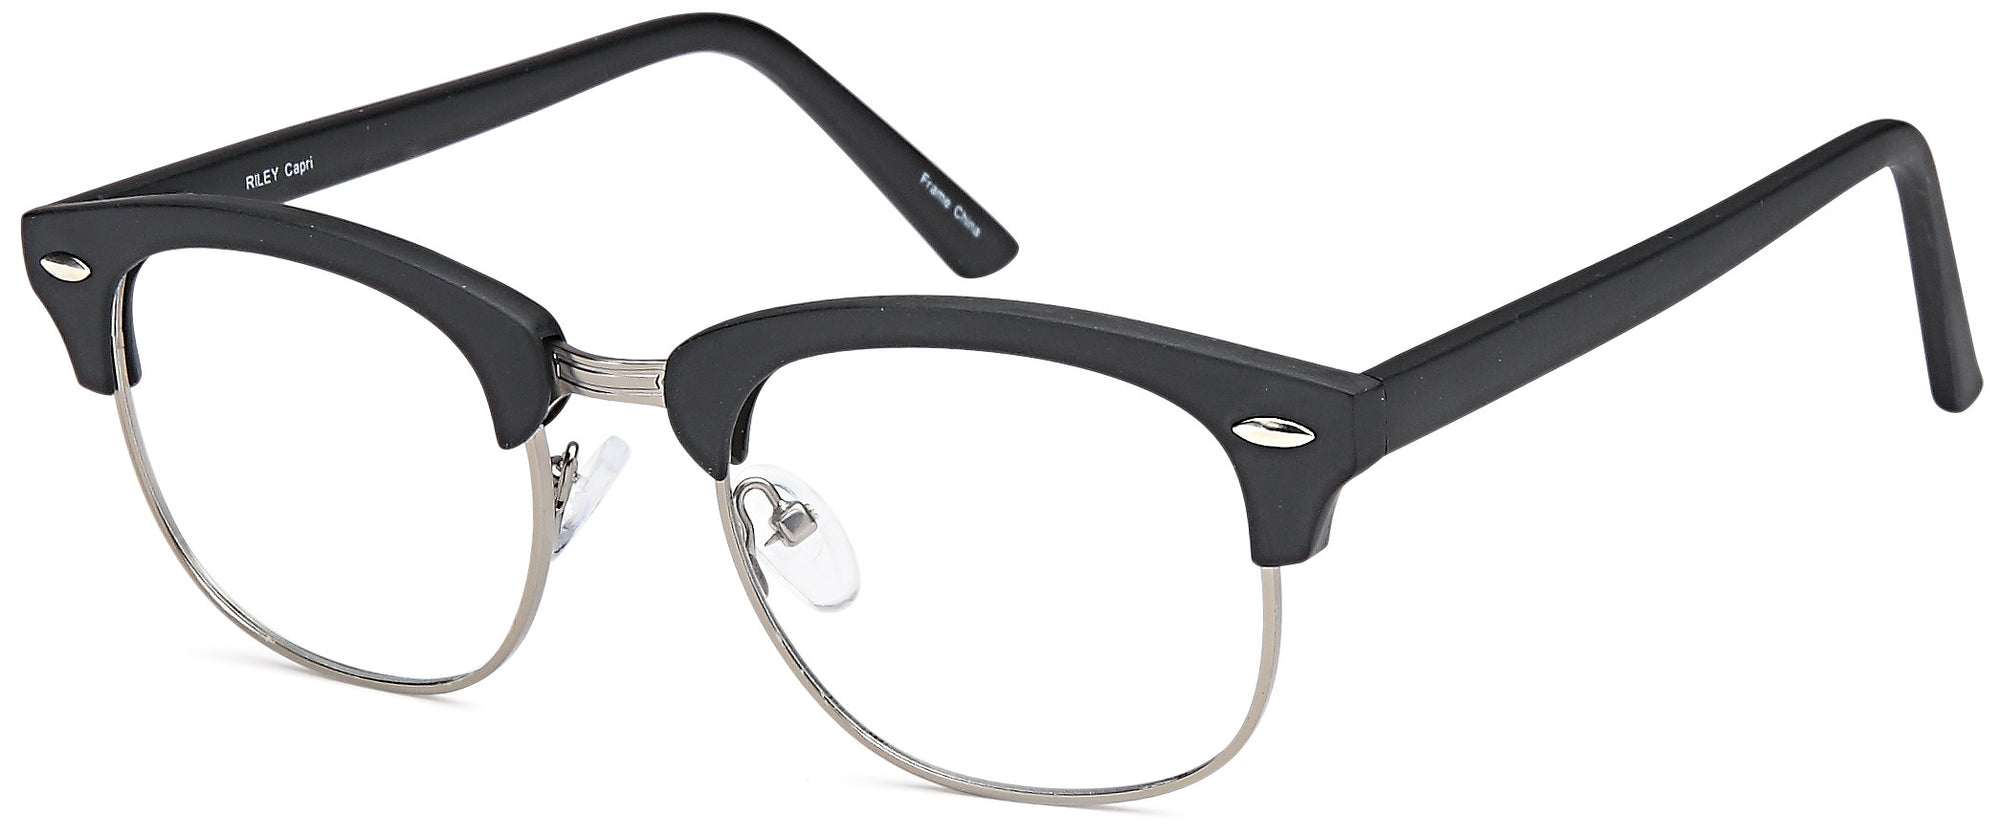 Millenial by Capri Optics Eyeglasses RILEY